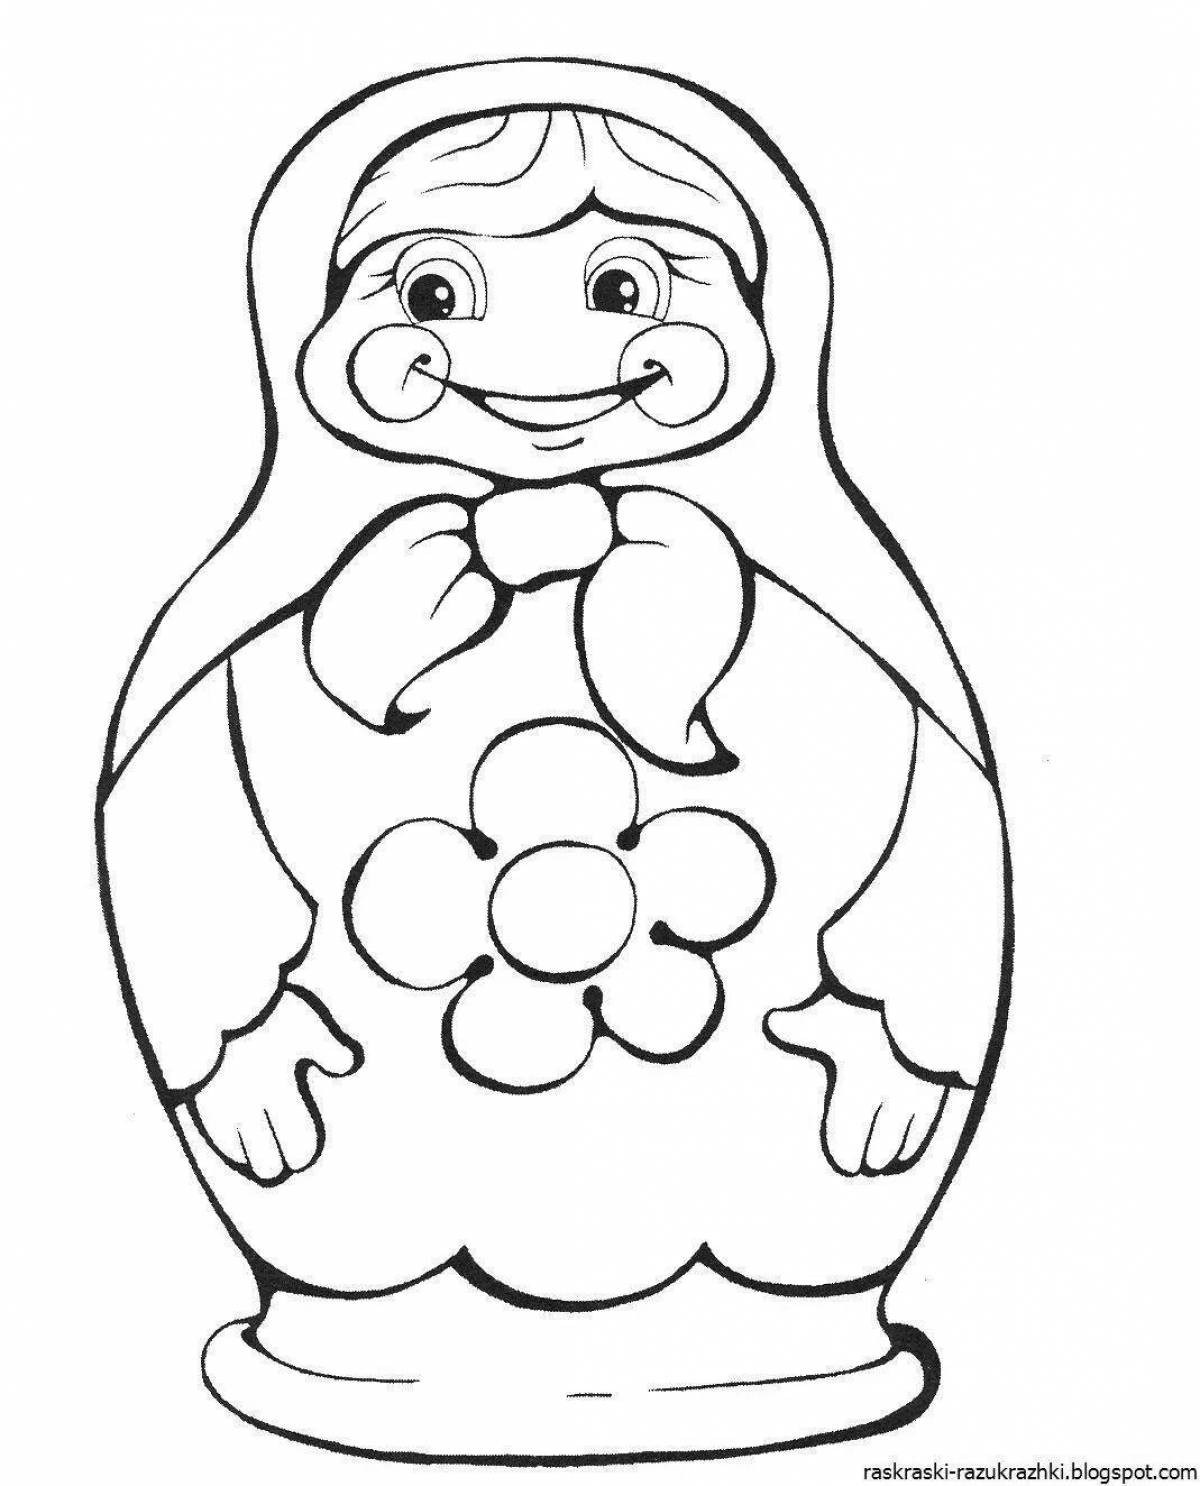 Playful matryoshka coloring page for kids